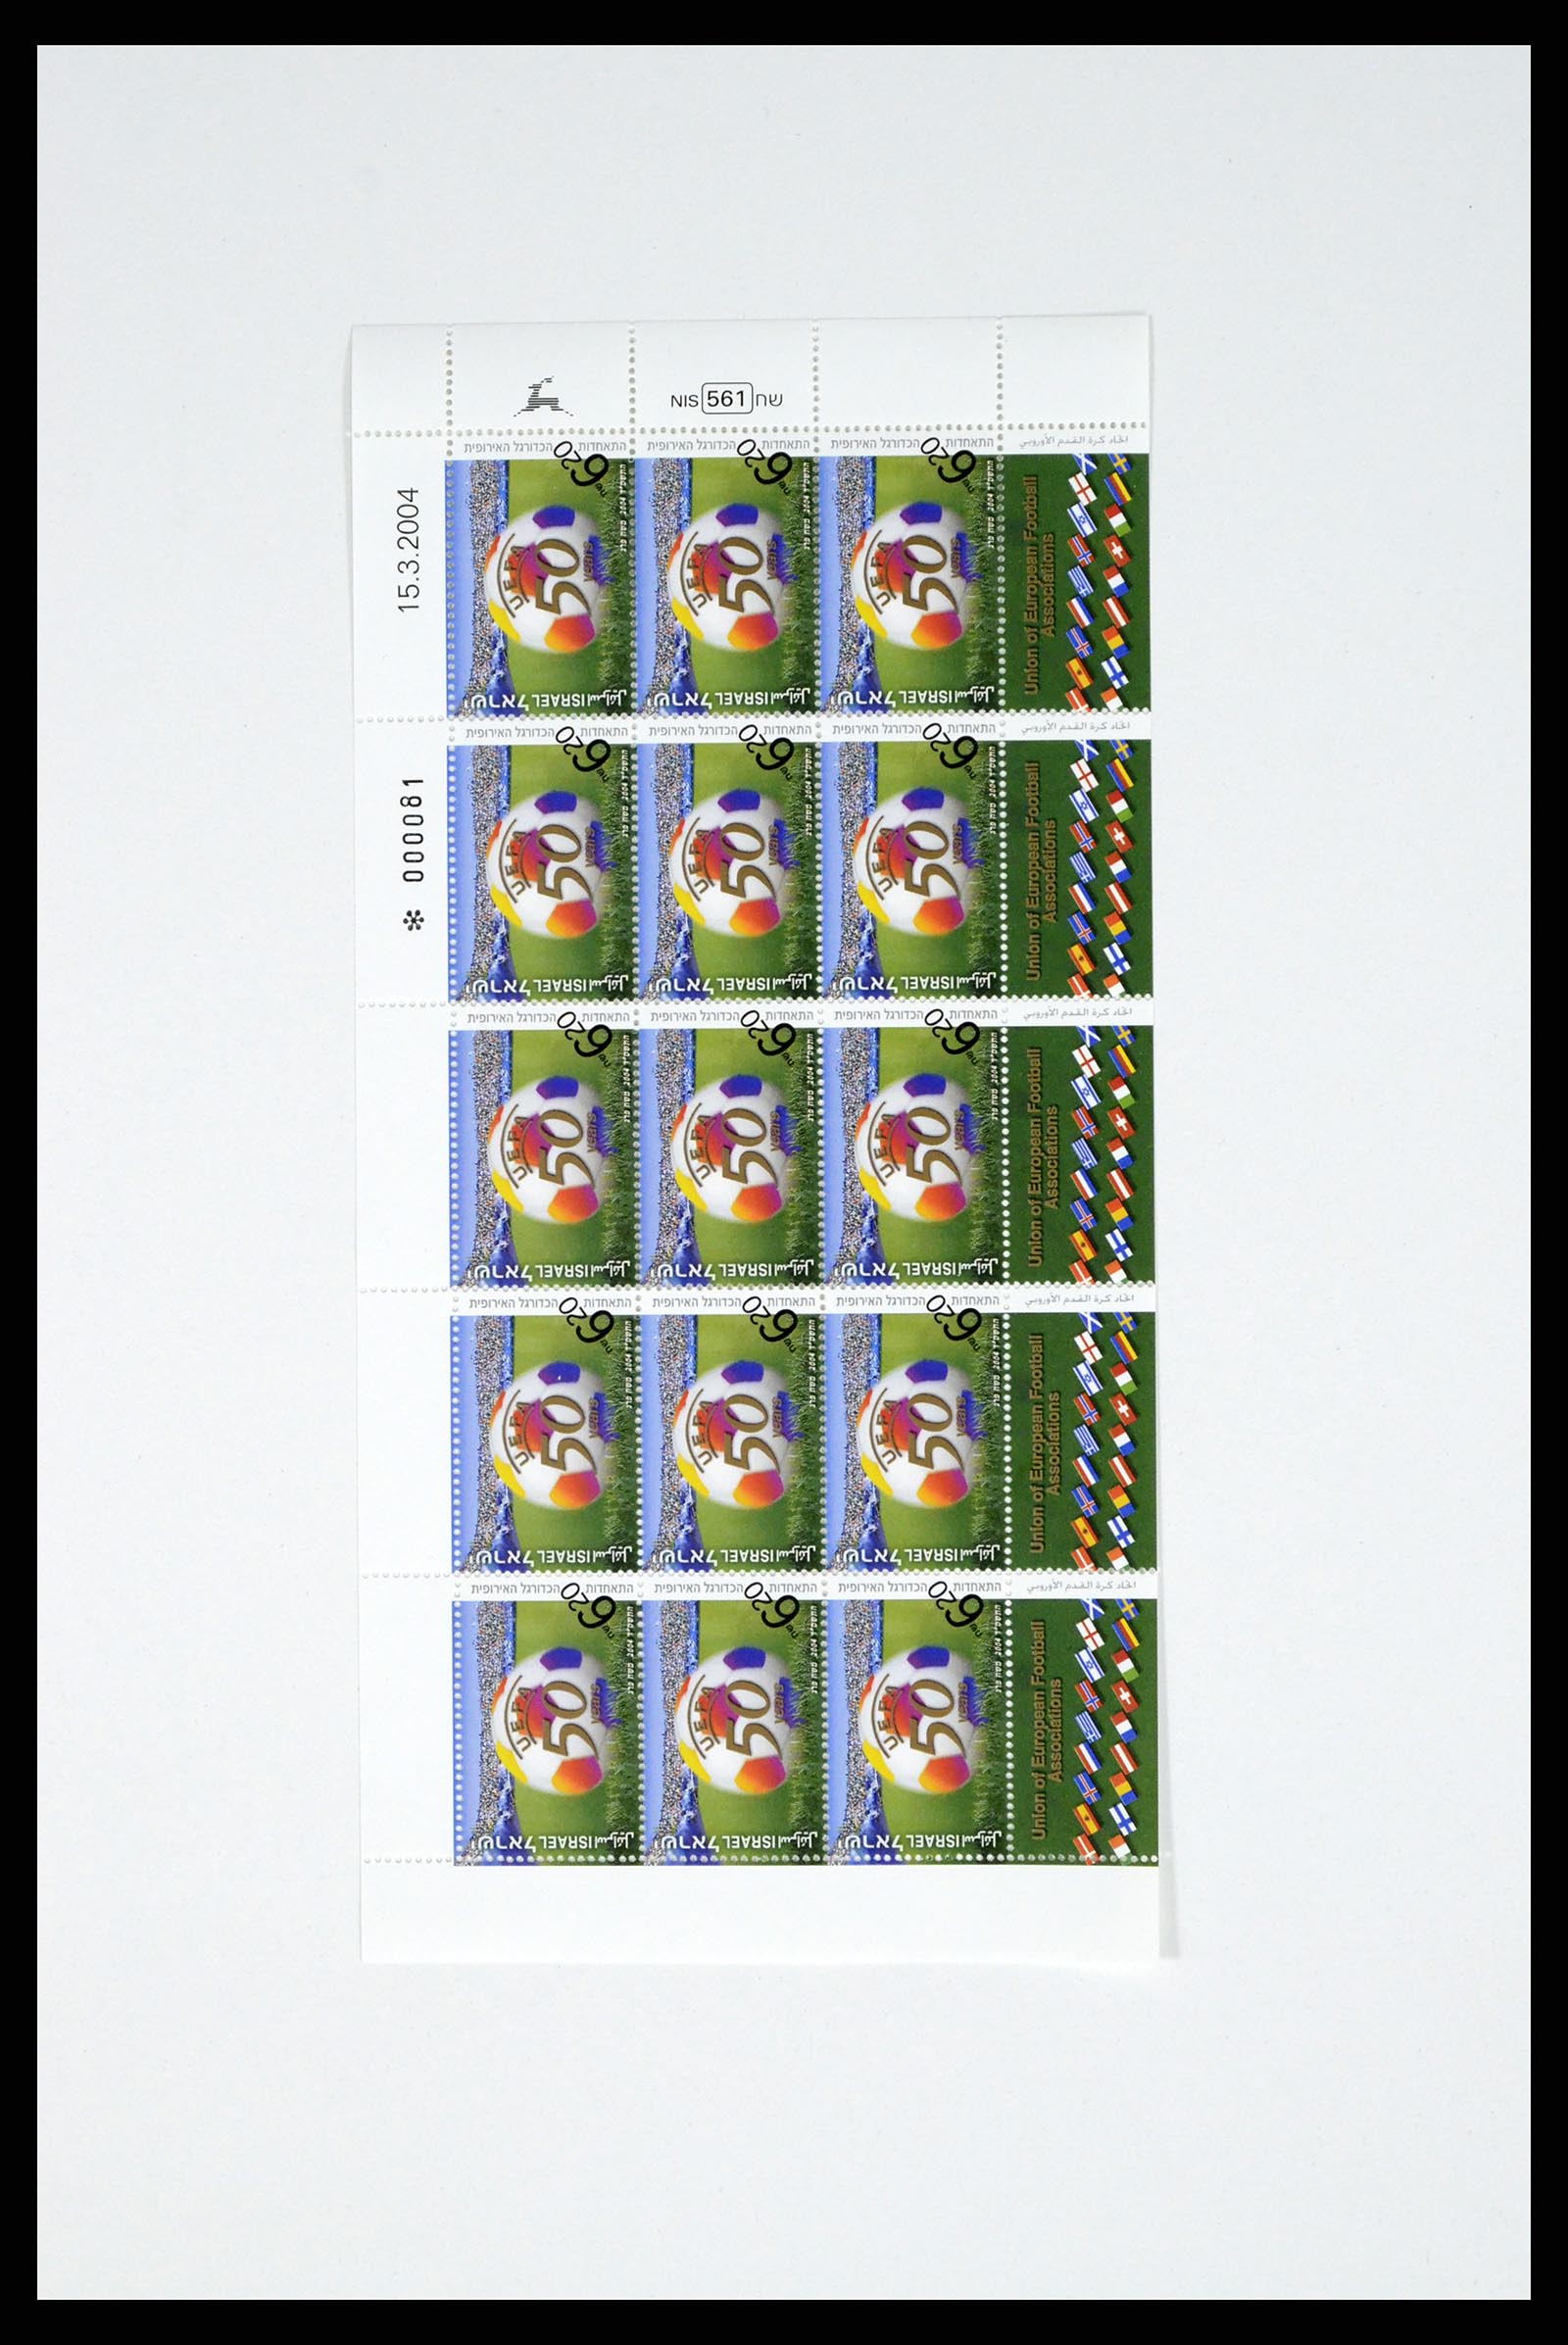 37779 335 - Stamp collection 37779 Israel sheetlets 1986-2009.